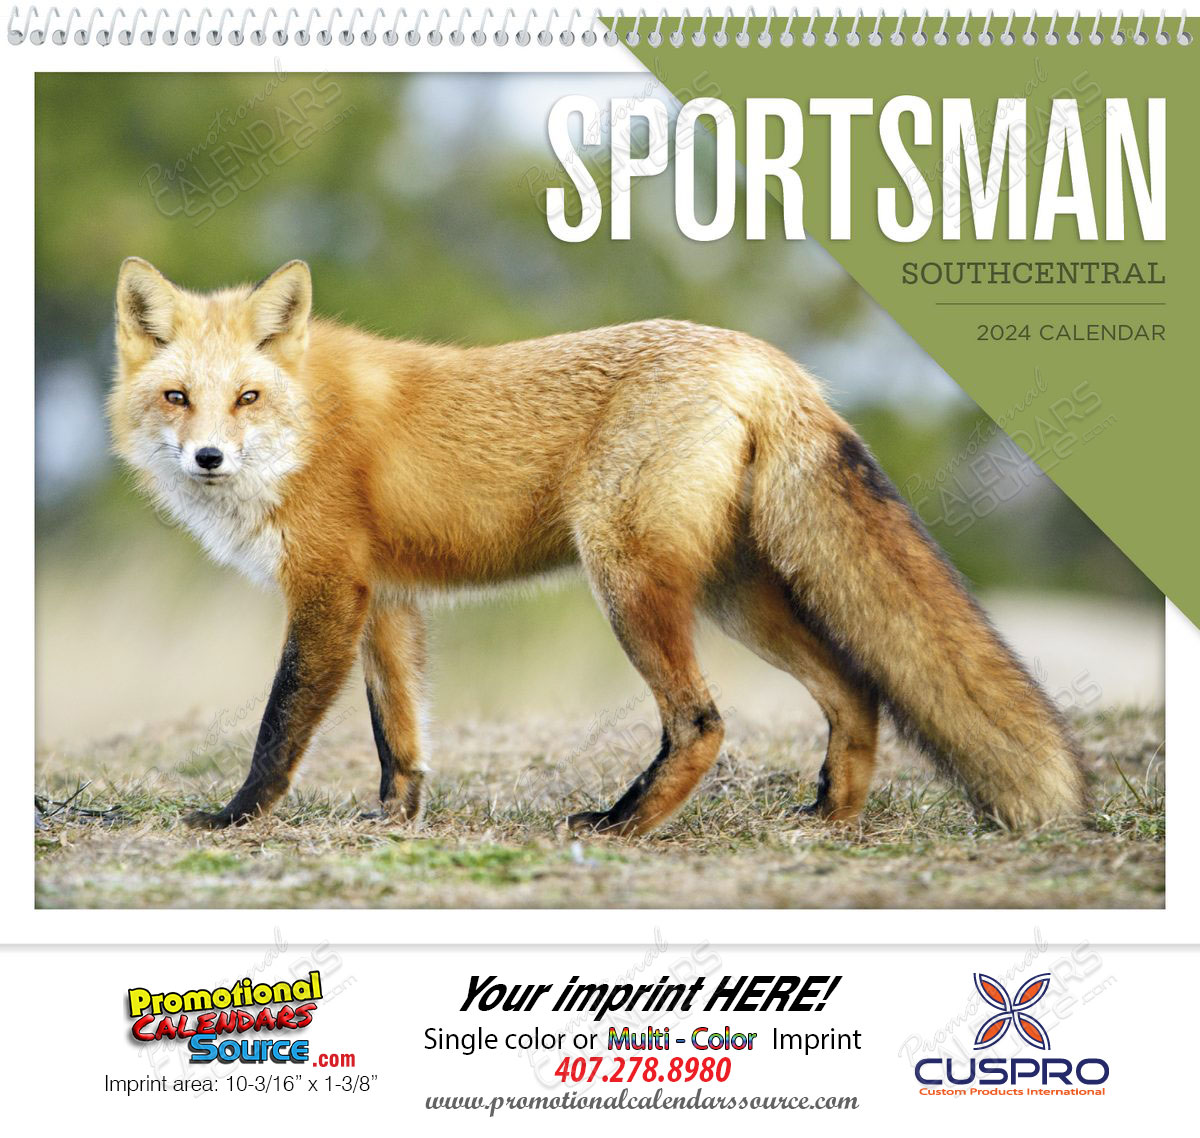 Southcentral Sportsman Promotional Calendar 